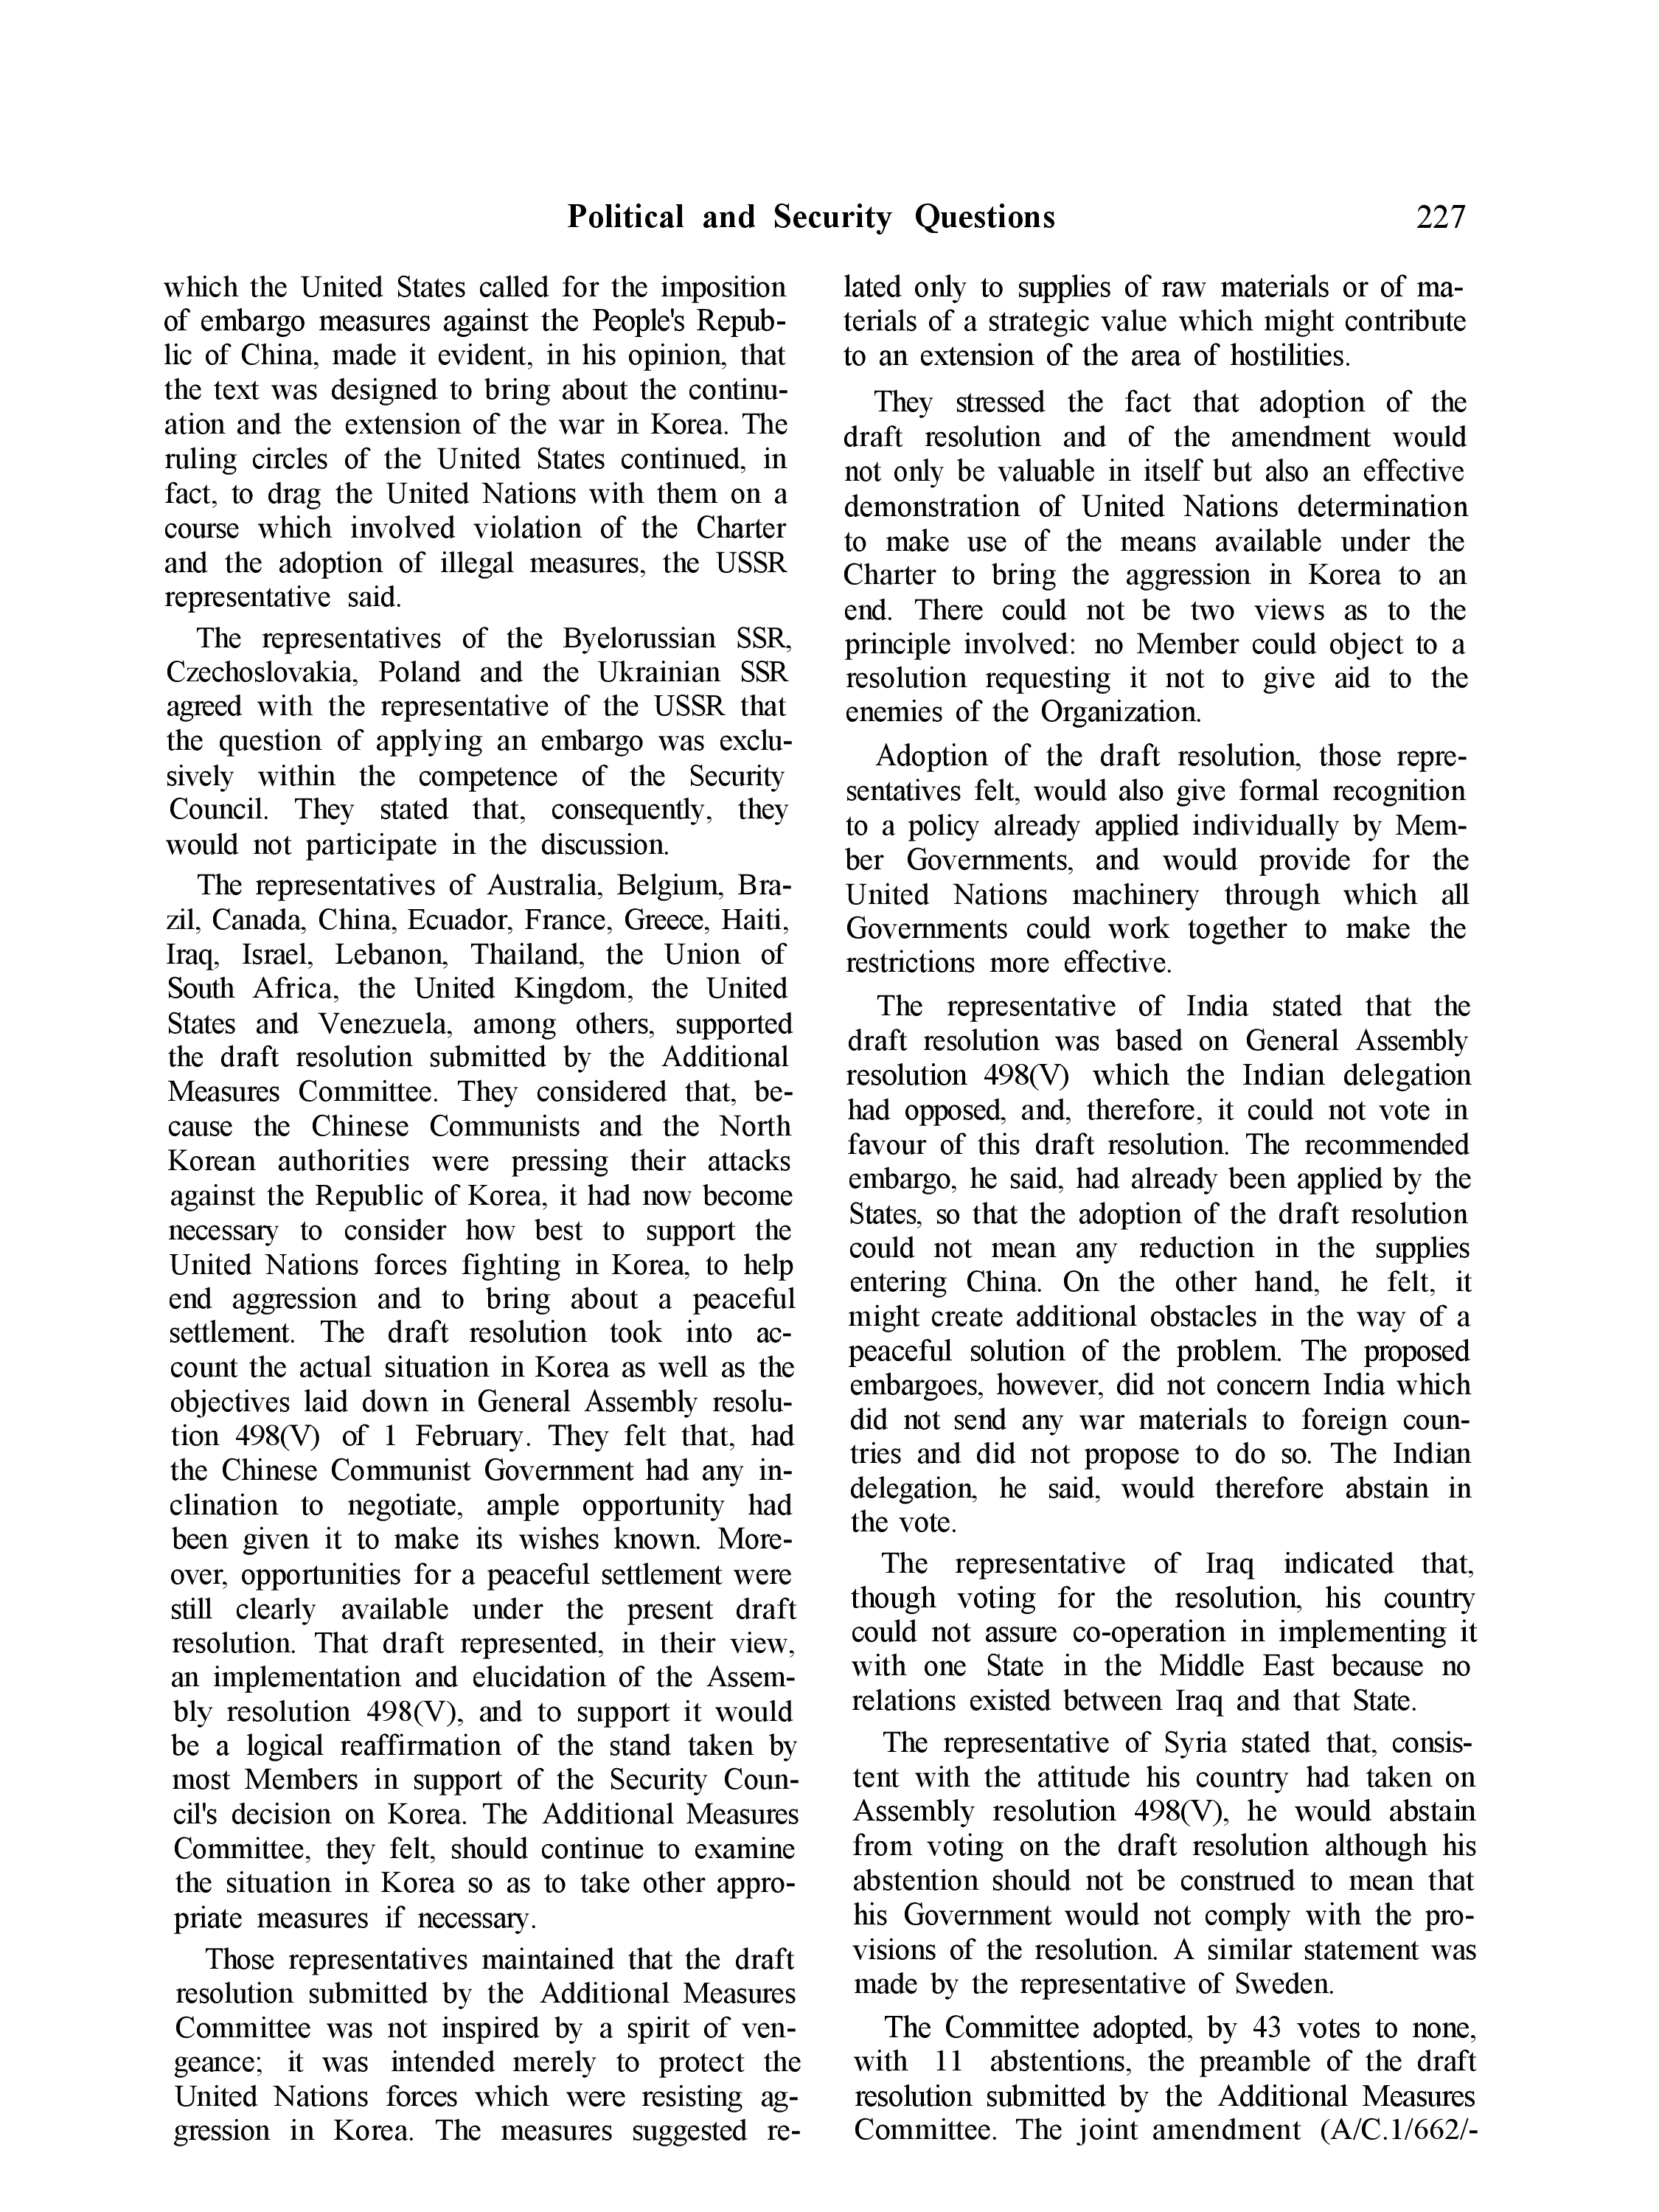 YUN Volume_Page 1951_237